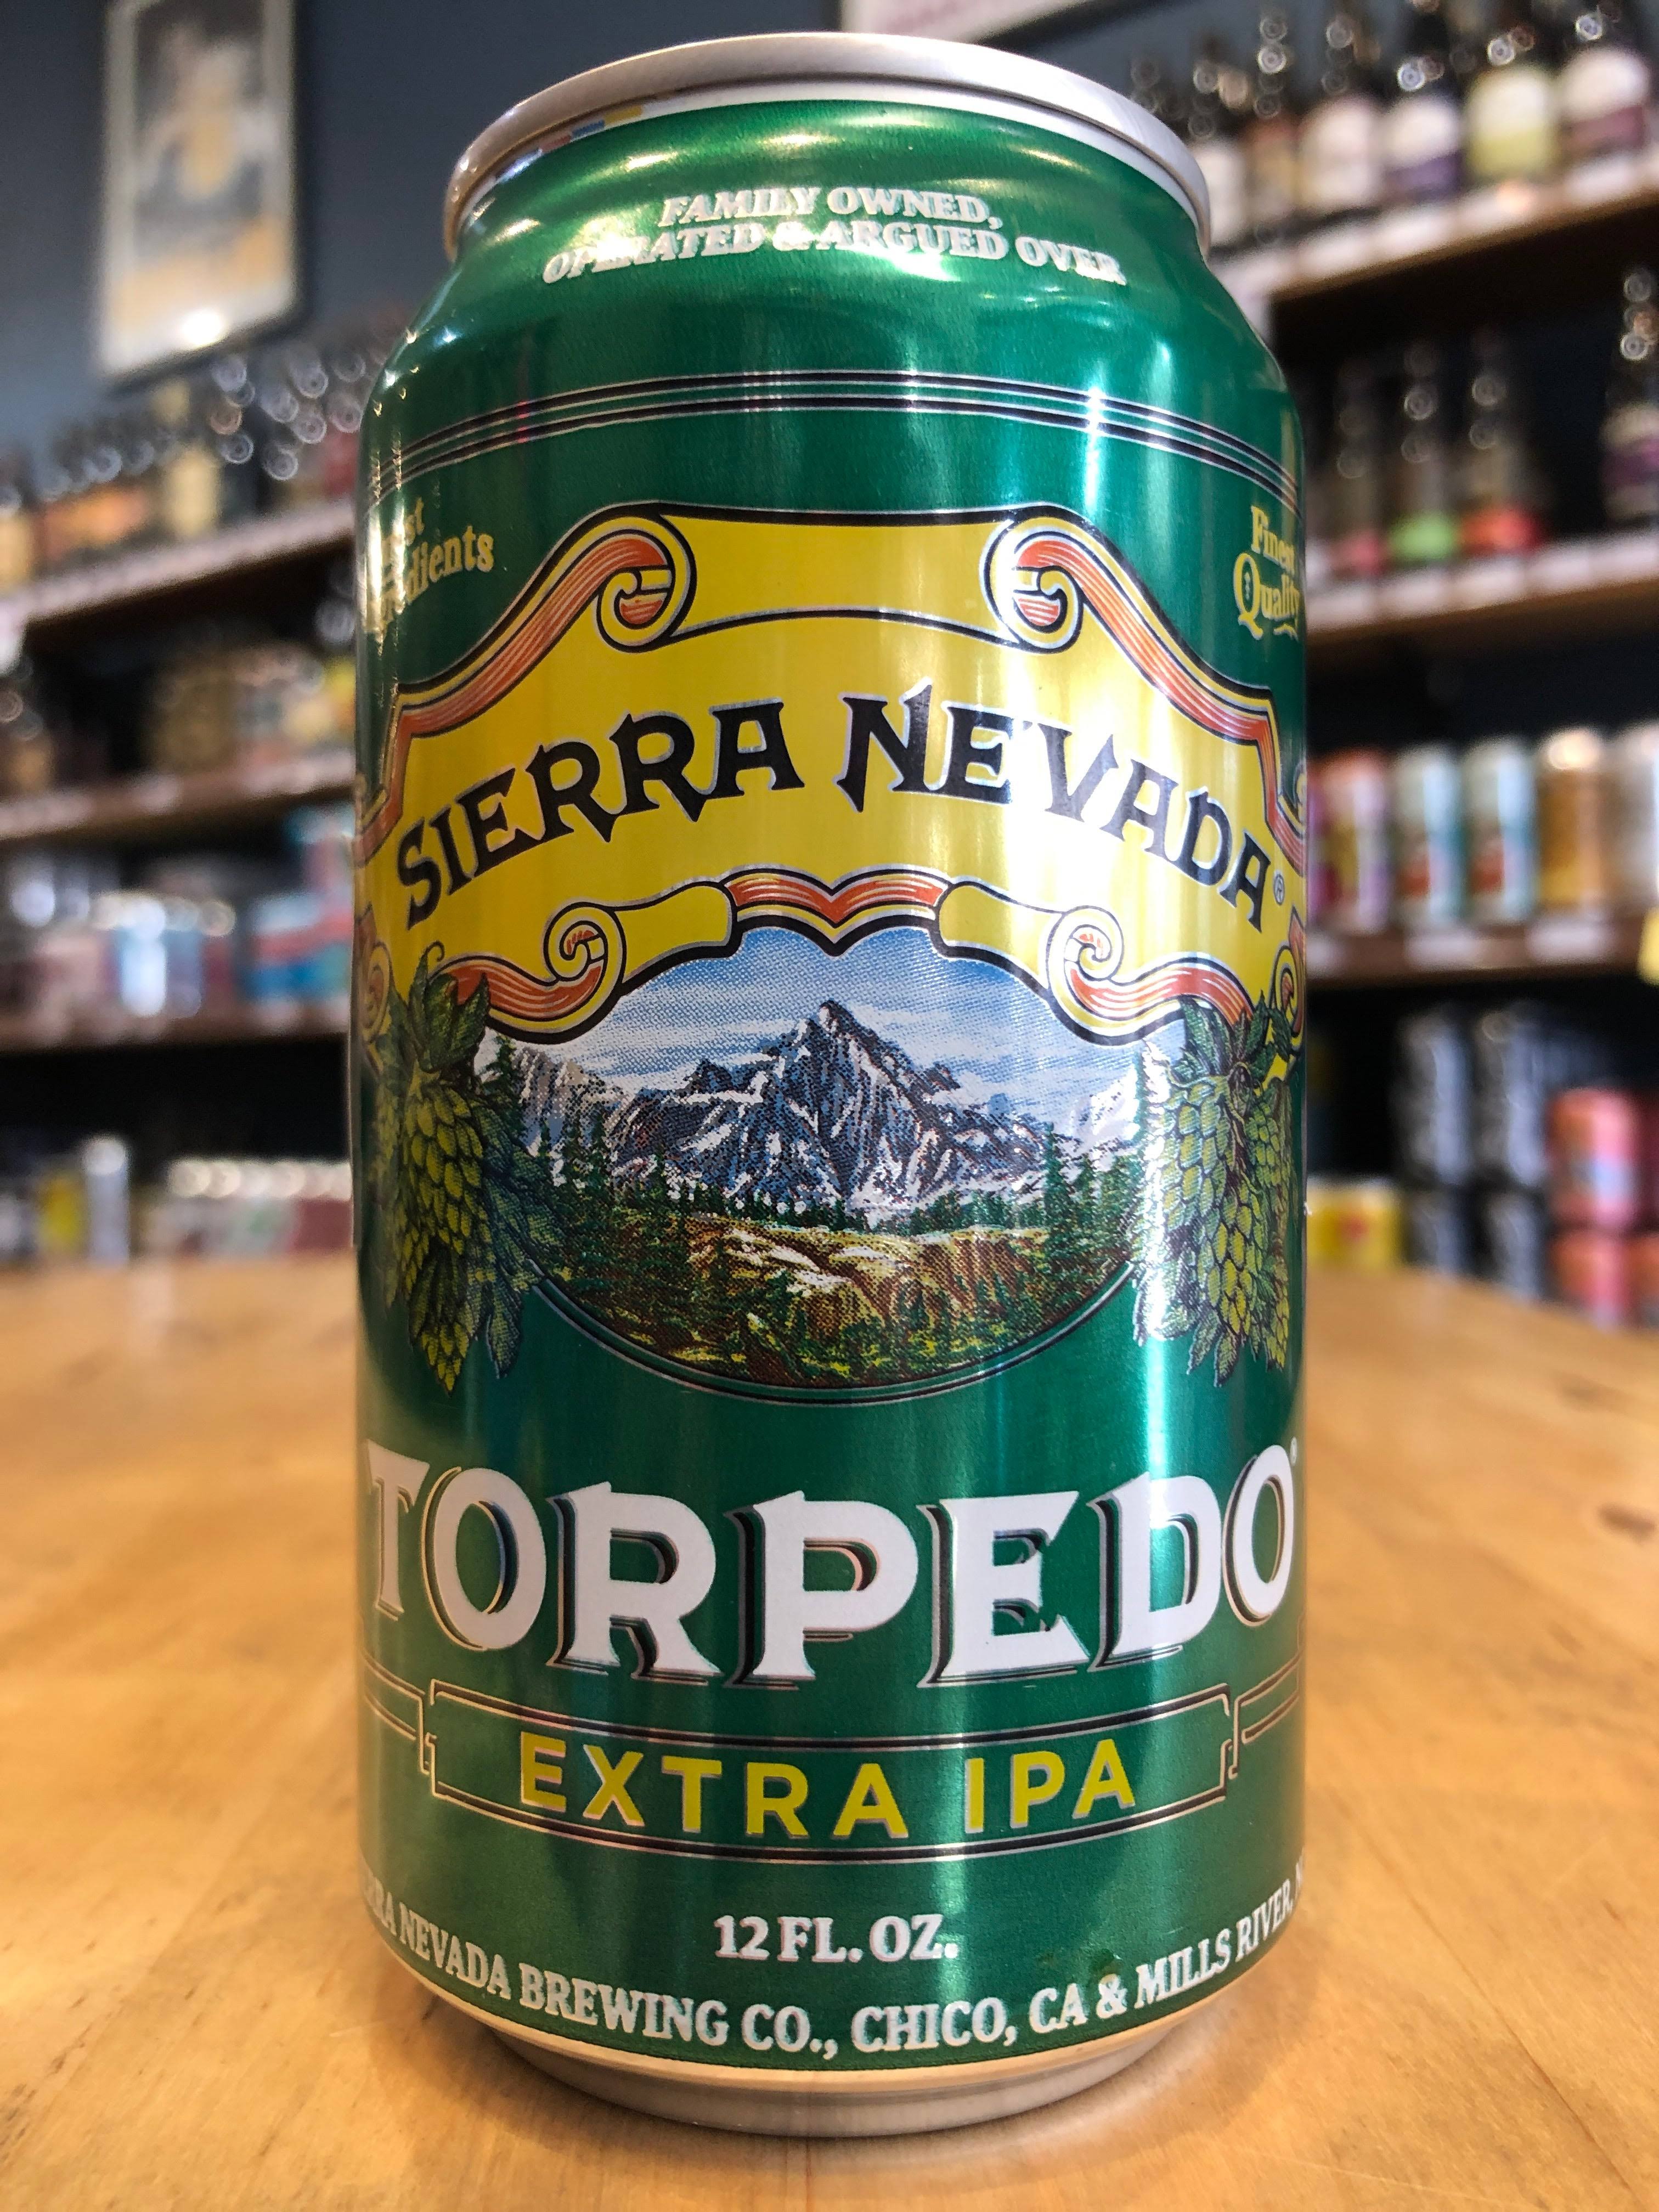 Sierra Nevada Torpedo 7.2%